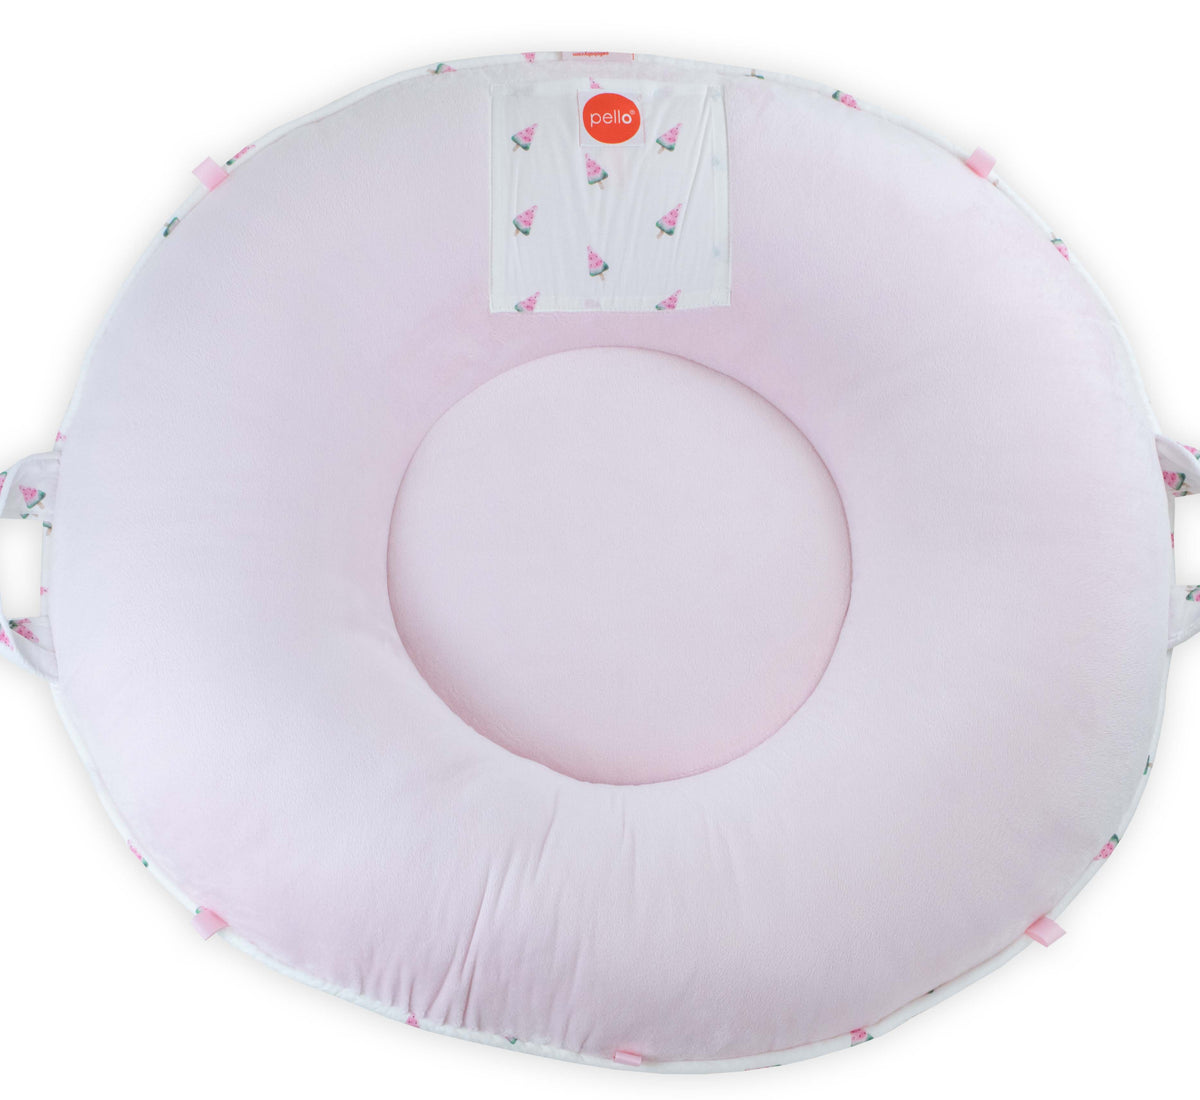 Pello Baby Clarabelle Pink Infant Floor Pillow